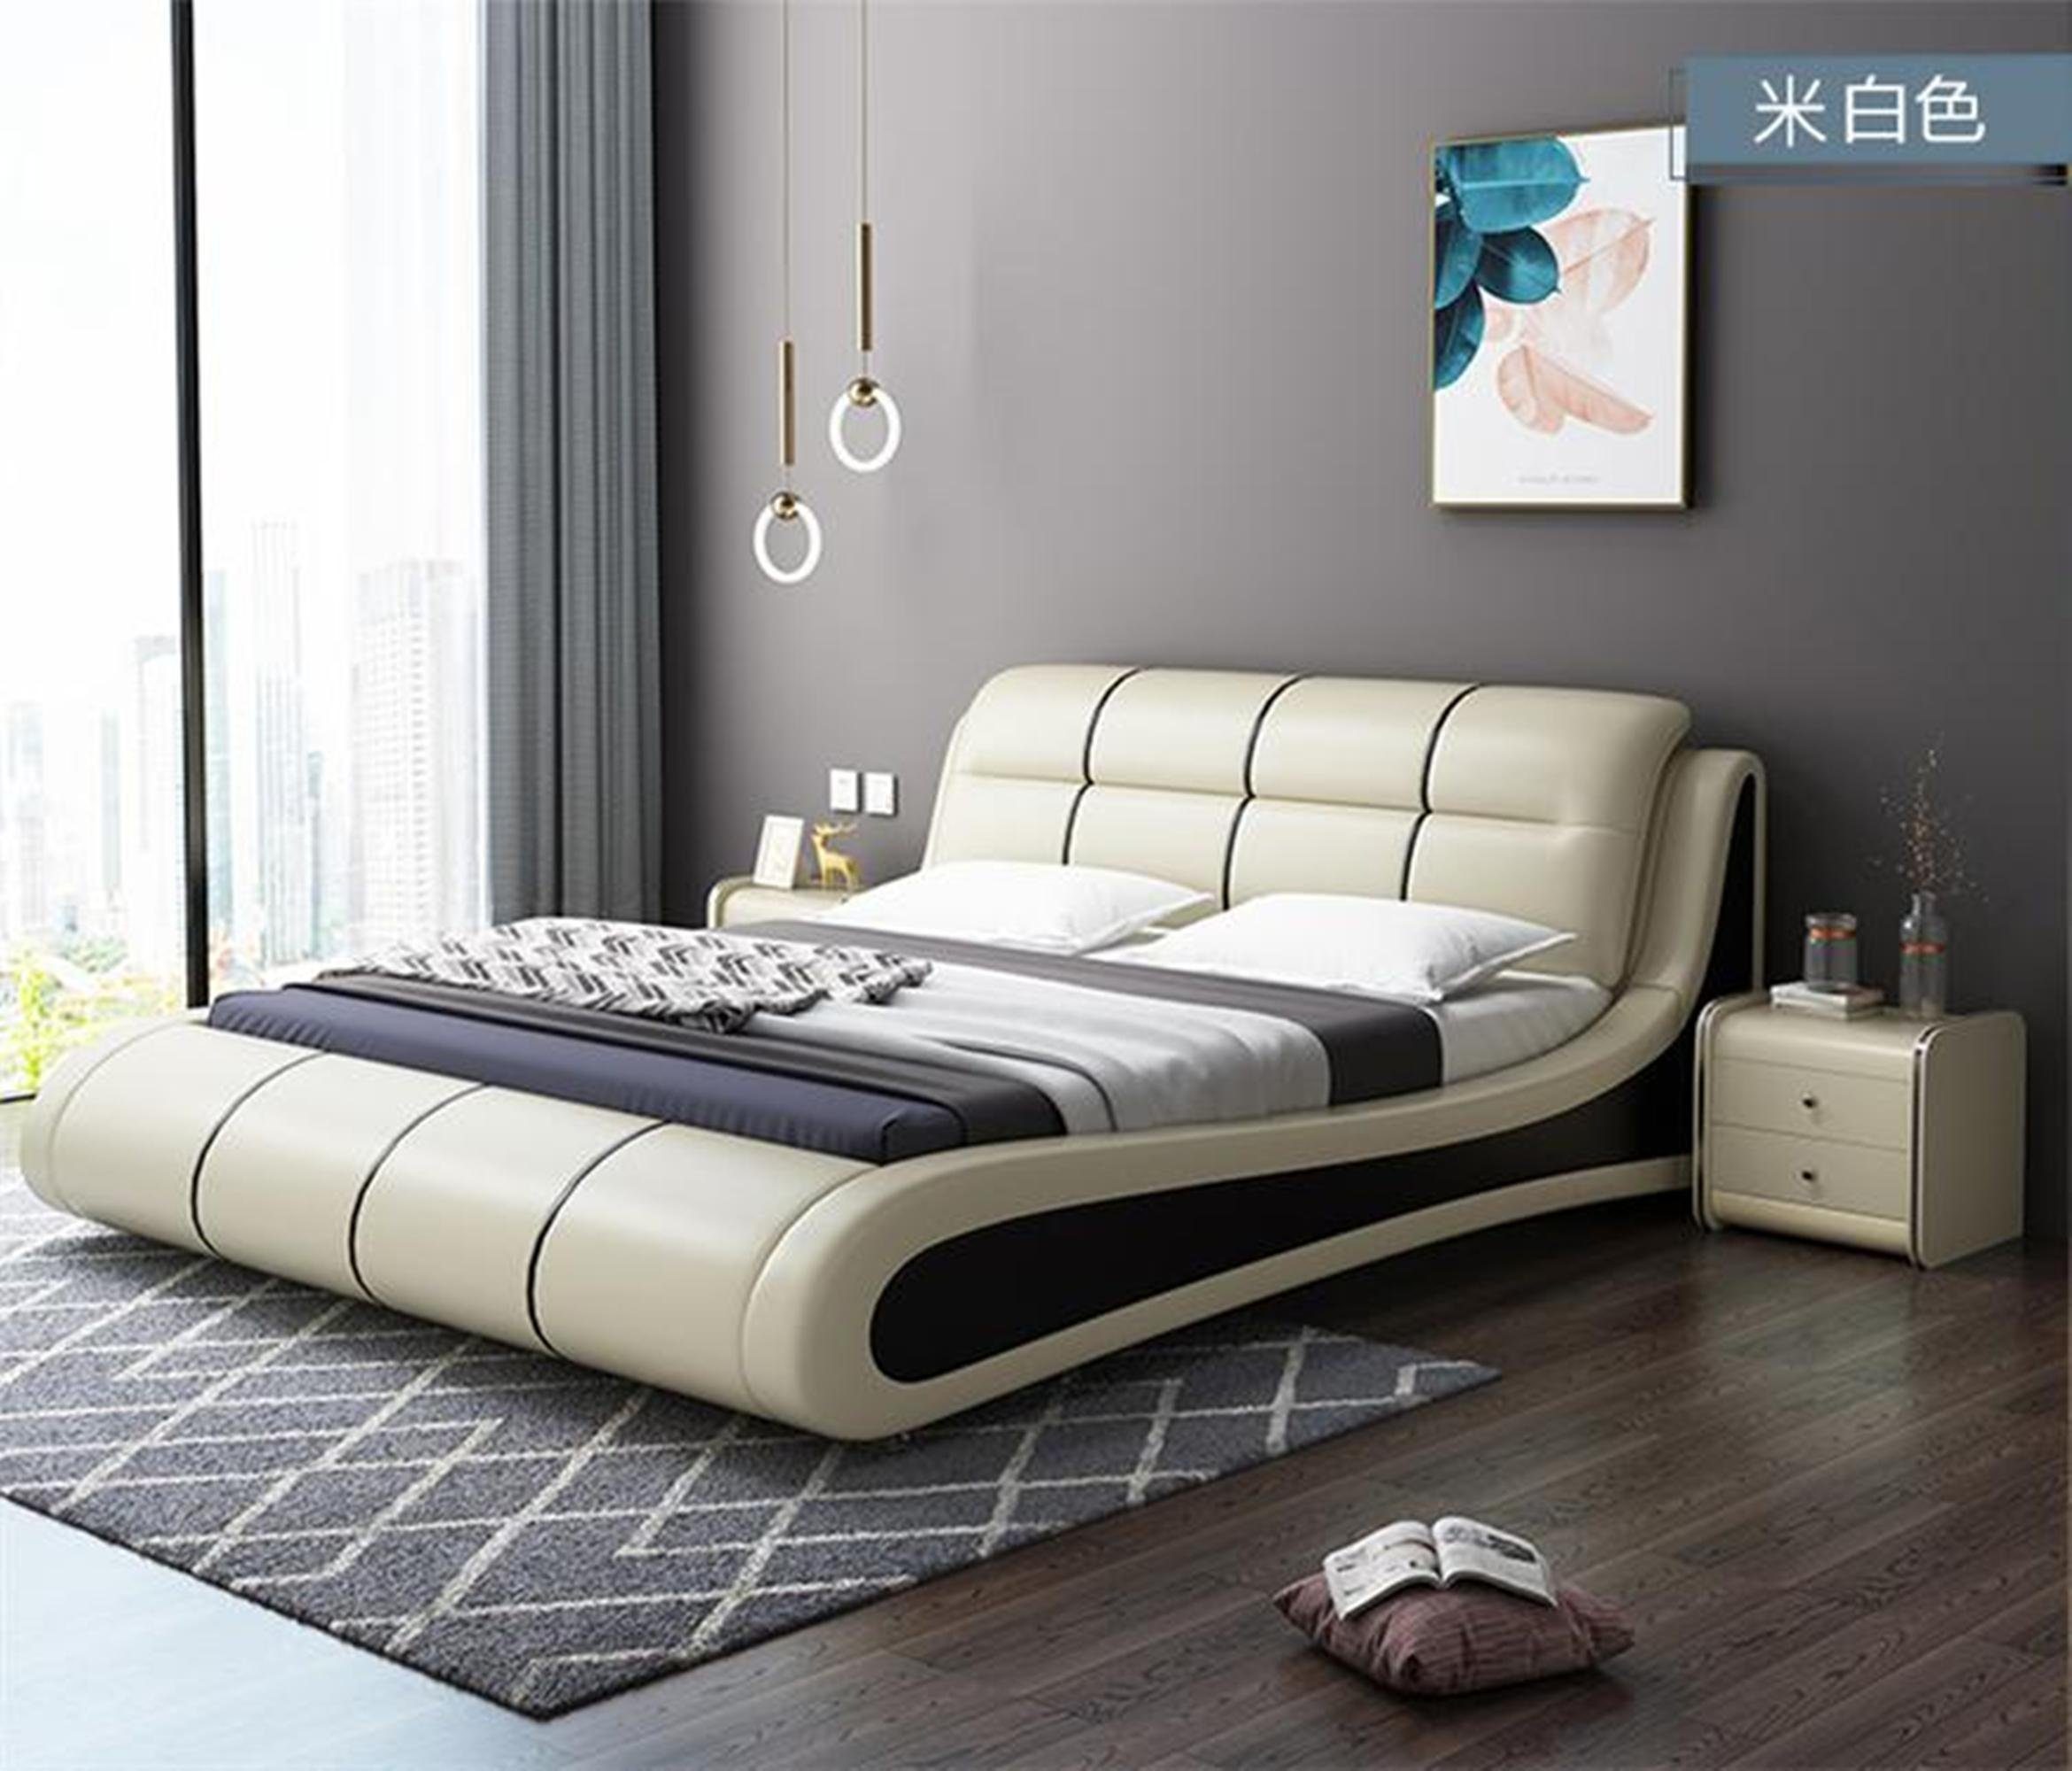 JVmoebel Bett Luxus Polster Doppel Schlafzimmer Beige Neu Design Betten Bett Ehe